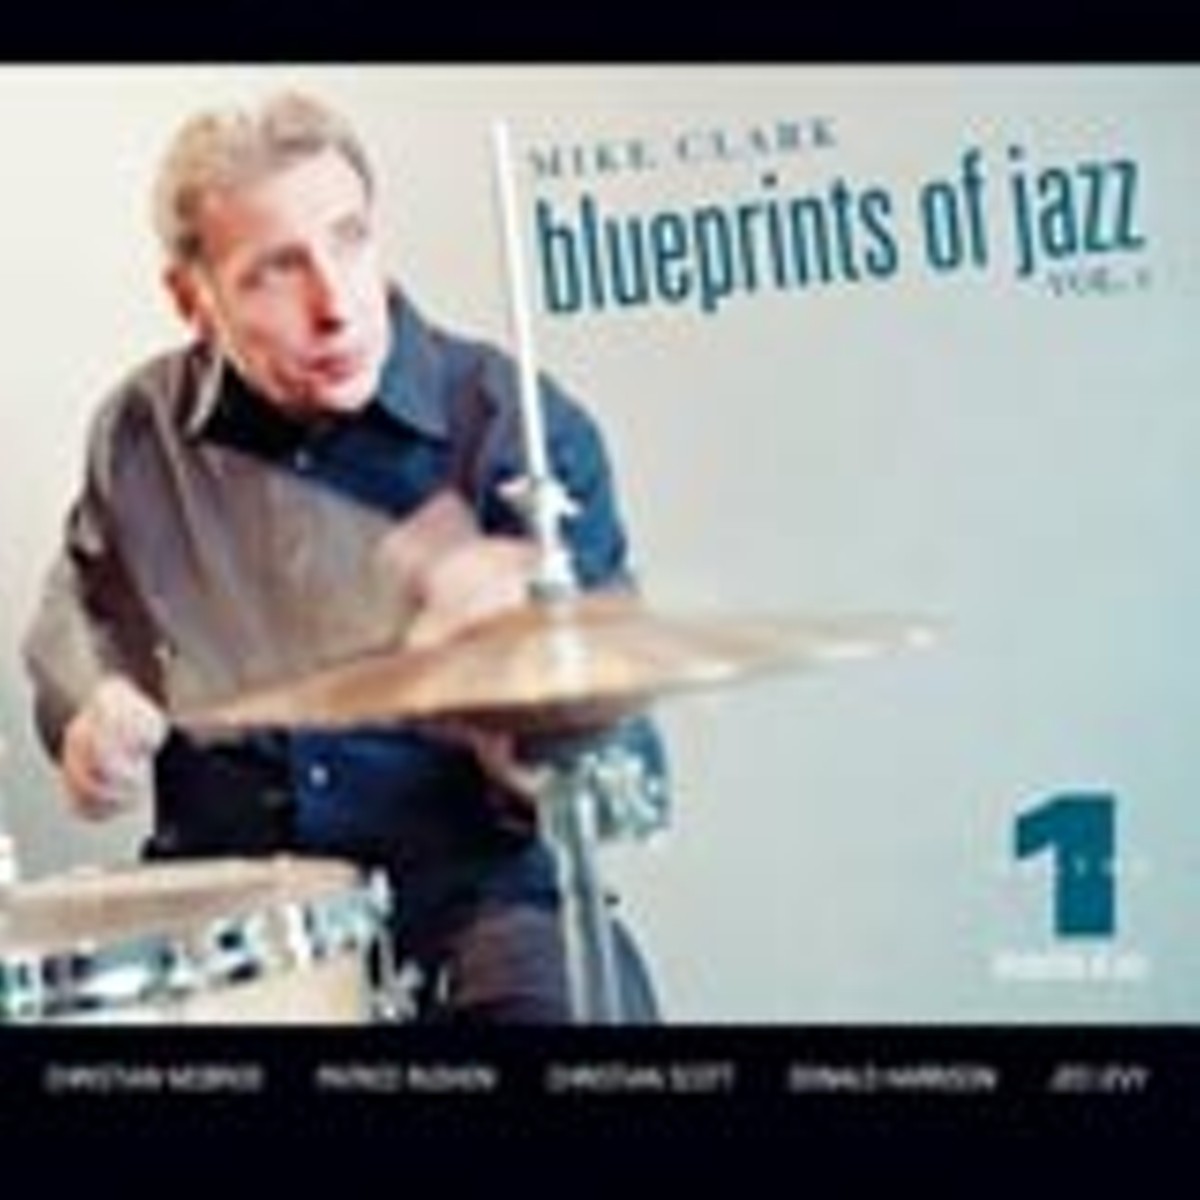 Blueprints of Jazz Vol. 1